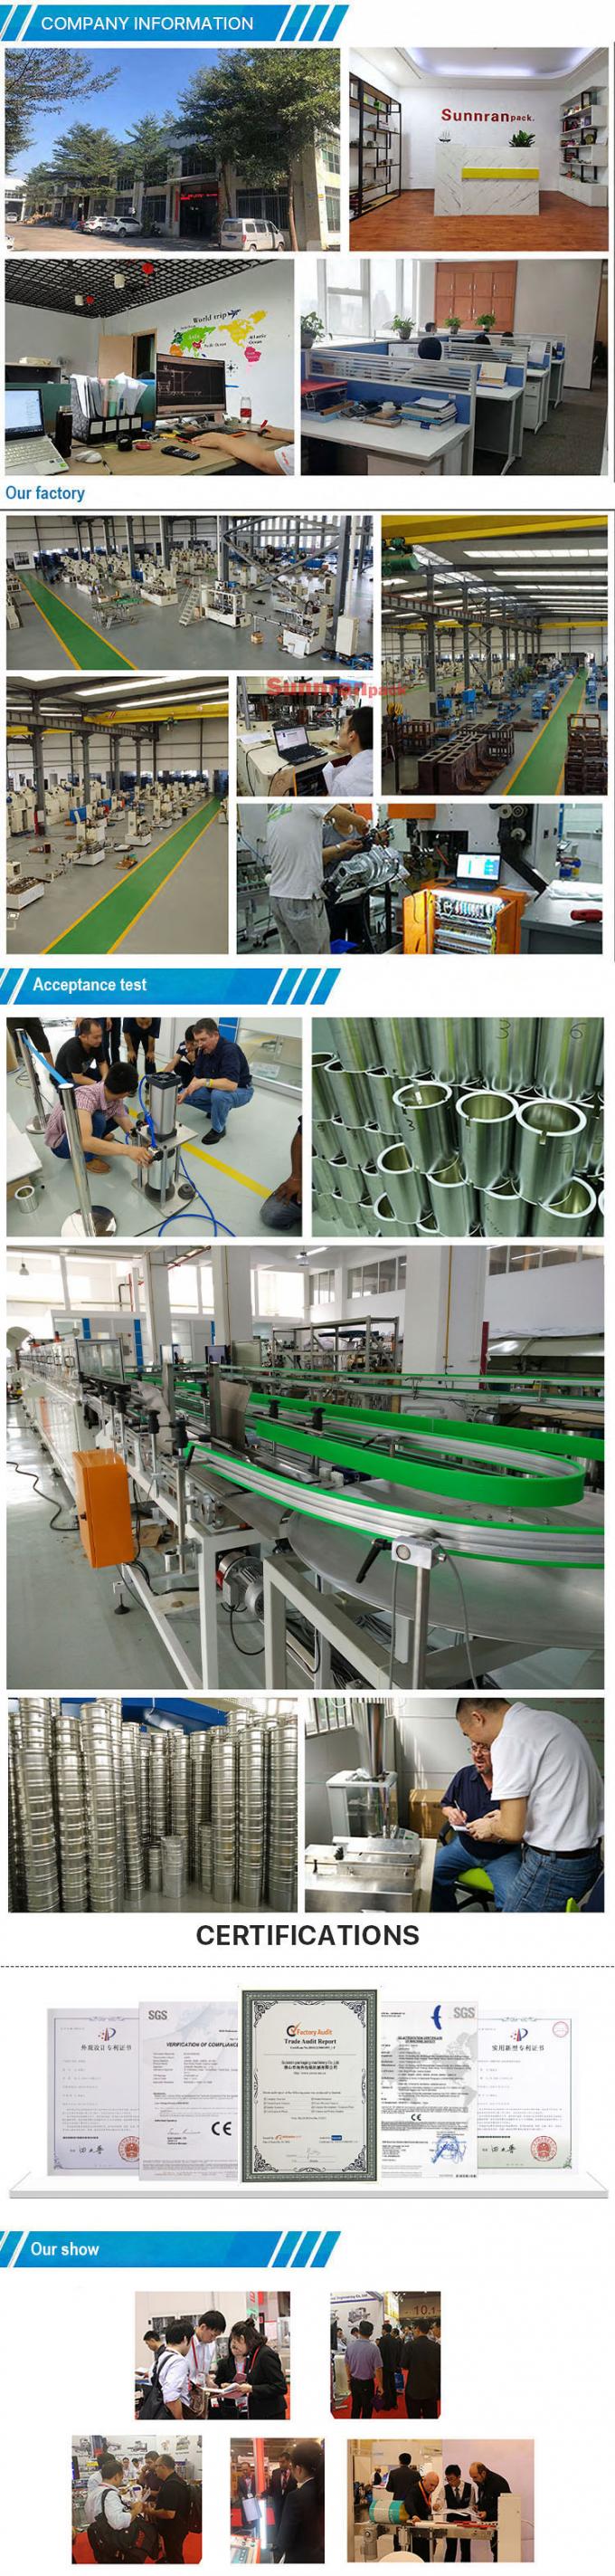 China Sunnran Packaging Machinery Co., Ltd. company profile 0